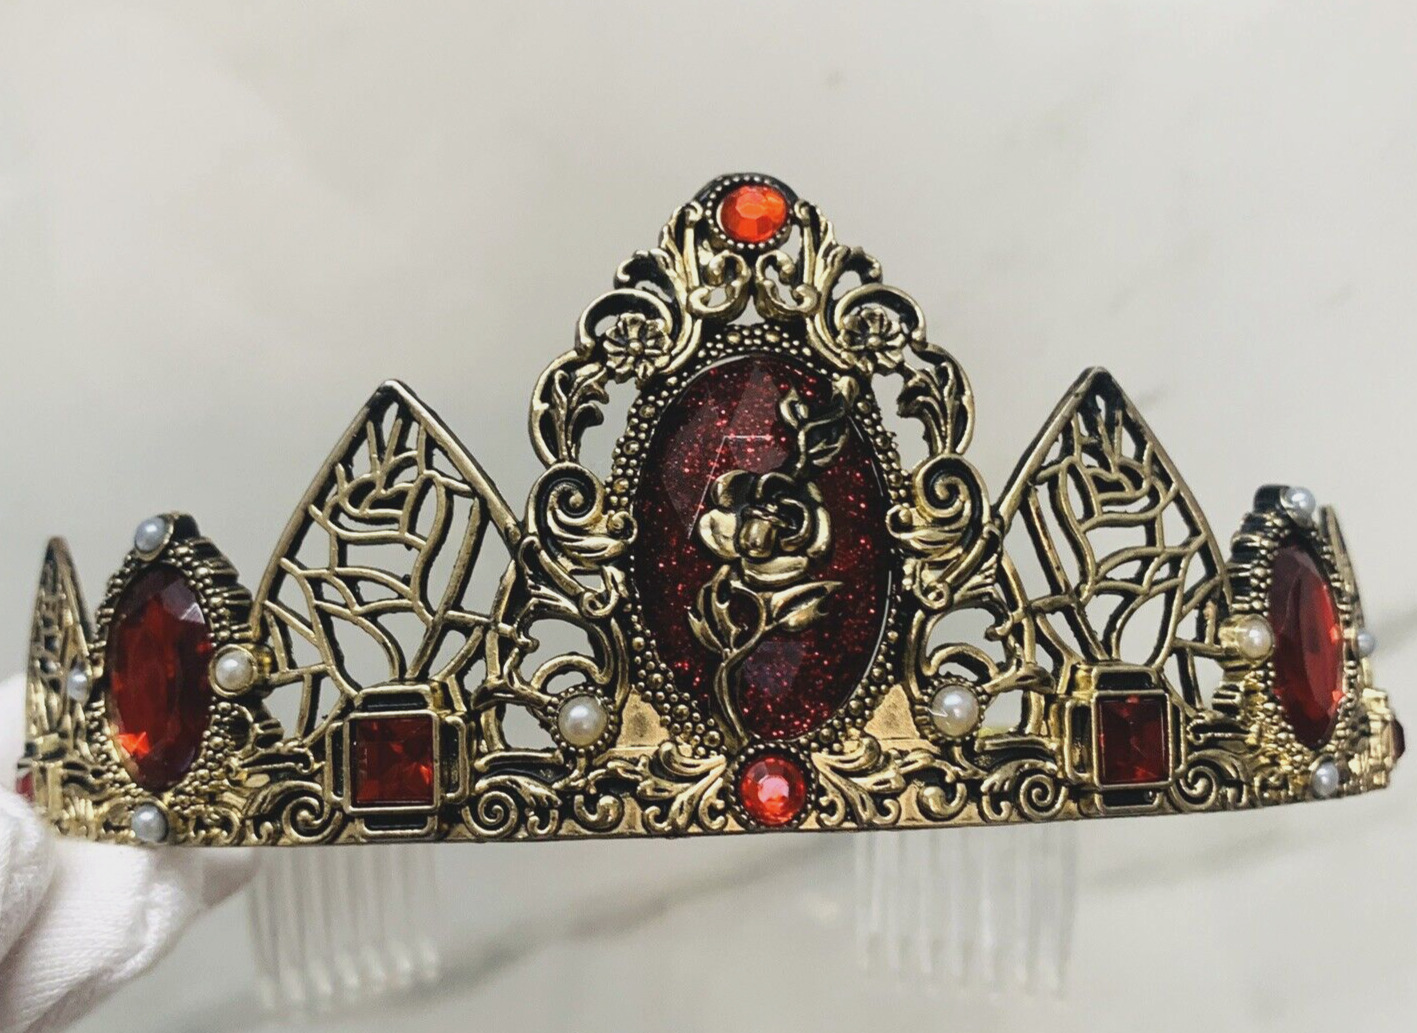 NICE Disney Princess GOLD Tiara Crown RED GLITTER Headband BEAUTY & THE BEAST